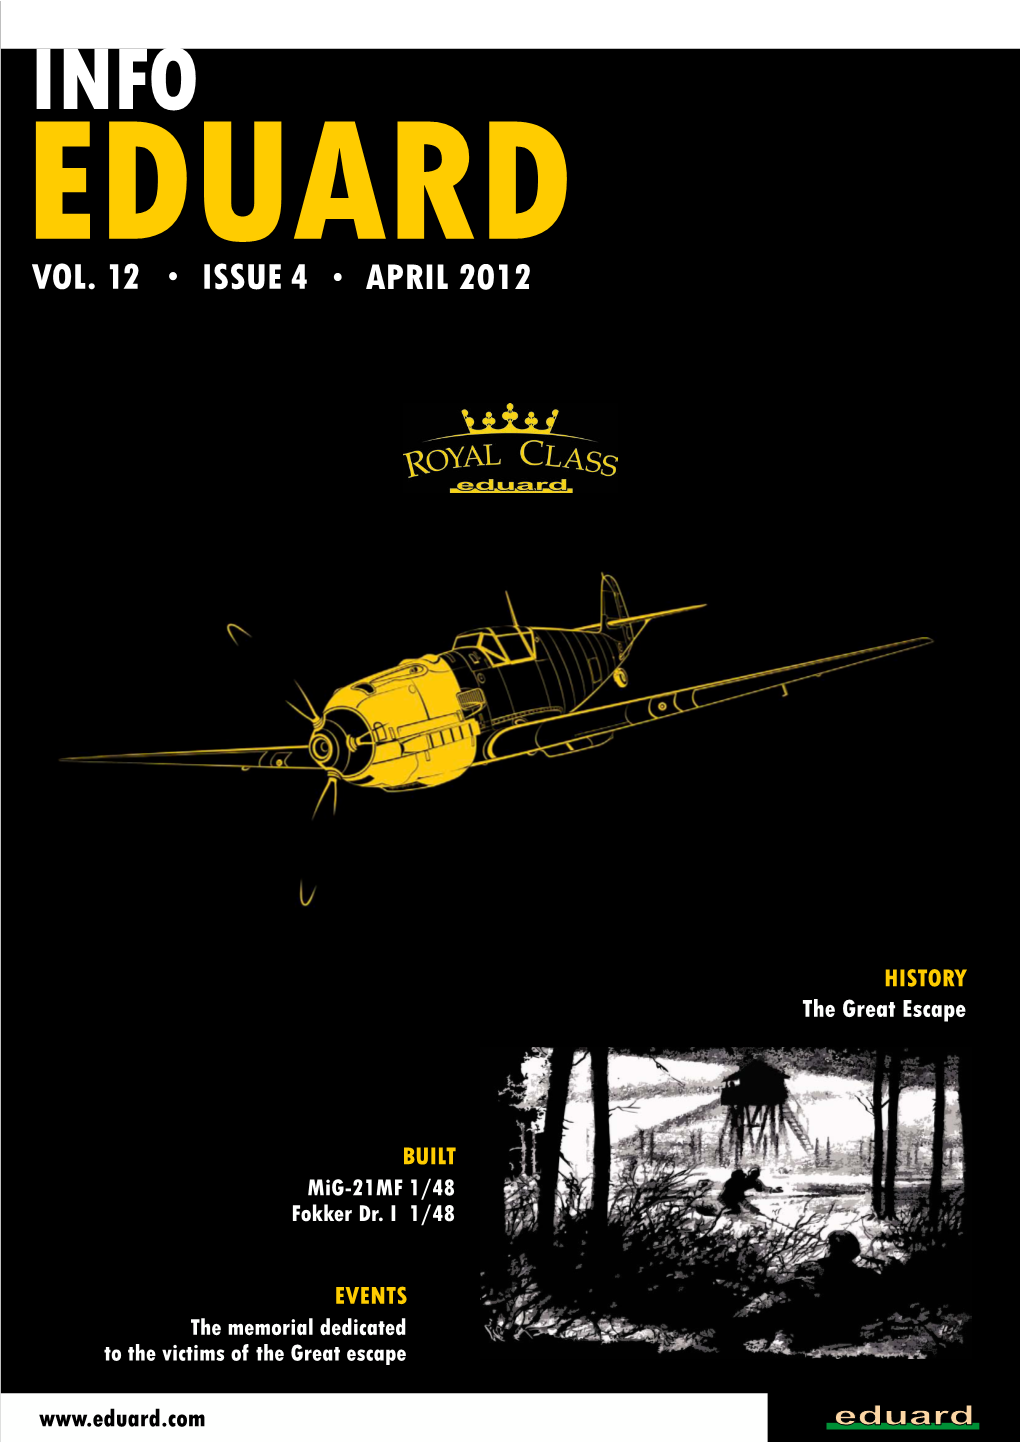 Vol. 12 Issue 4 April 2012